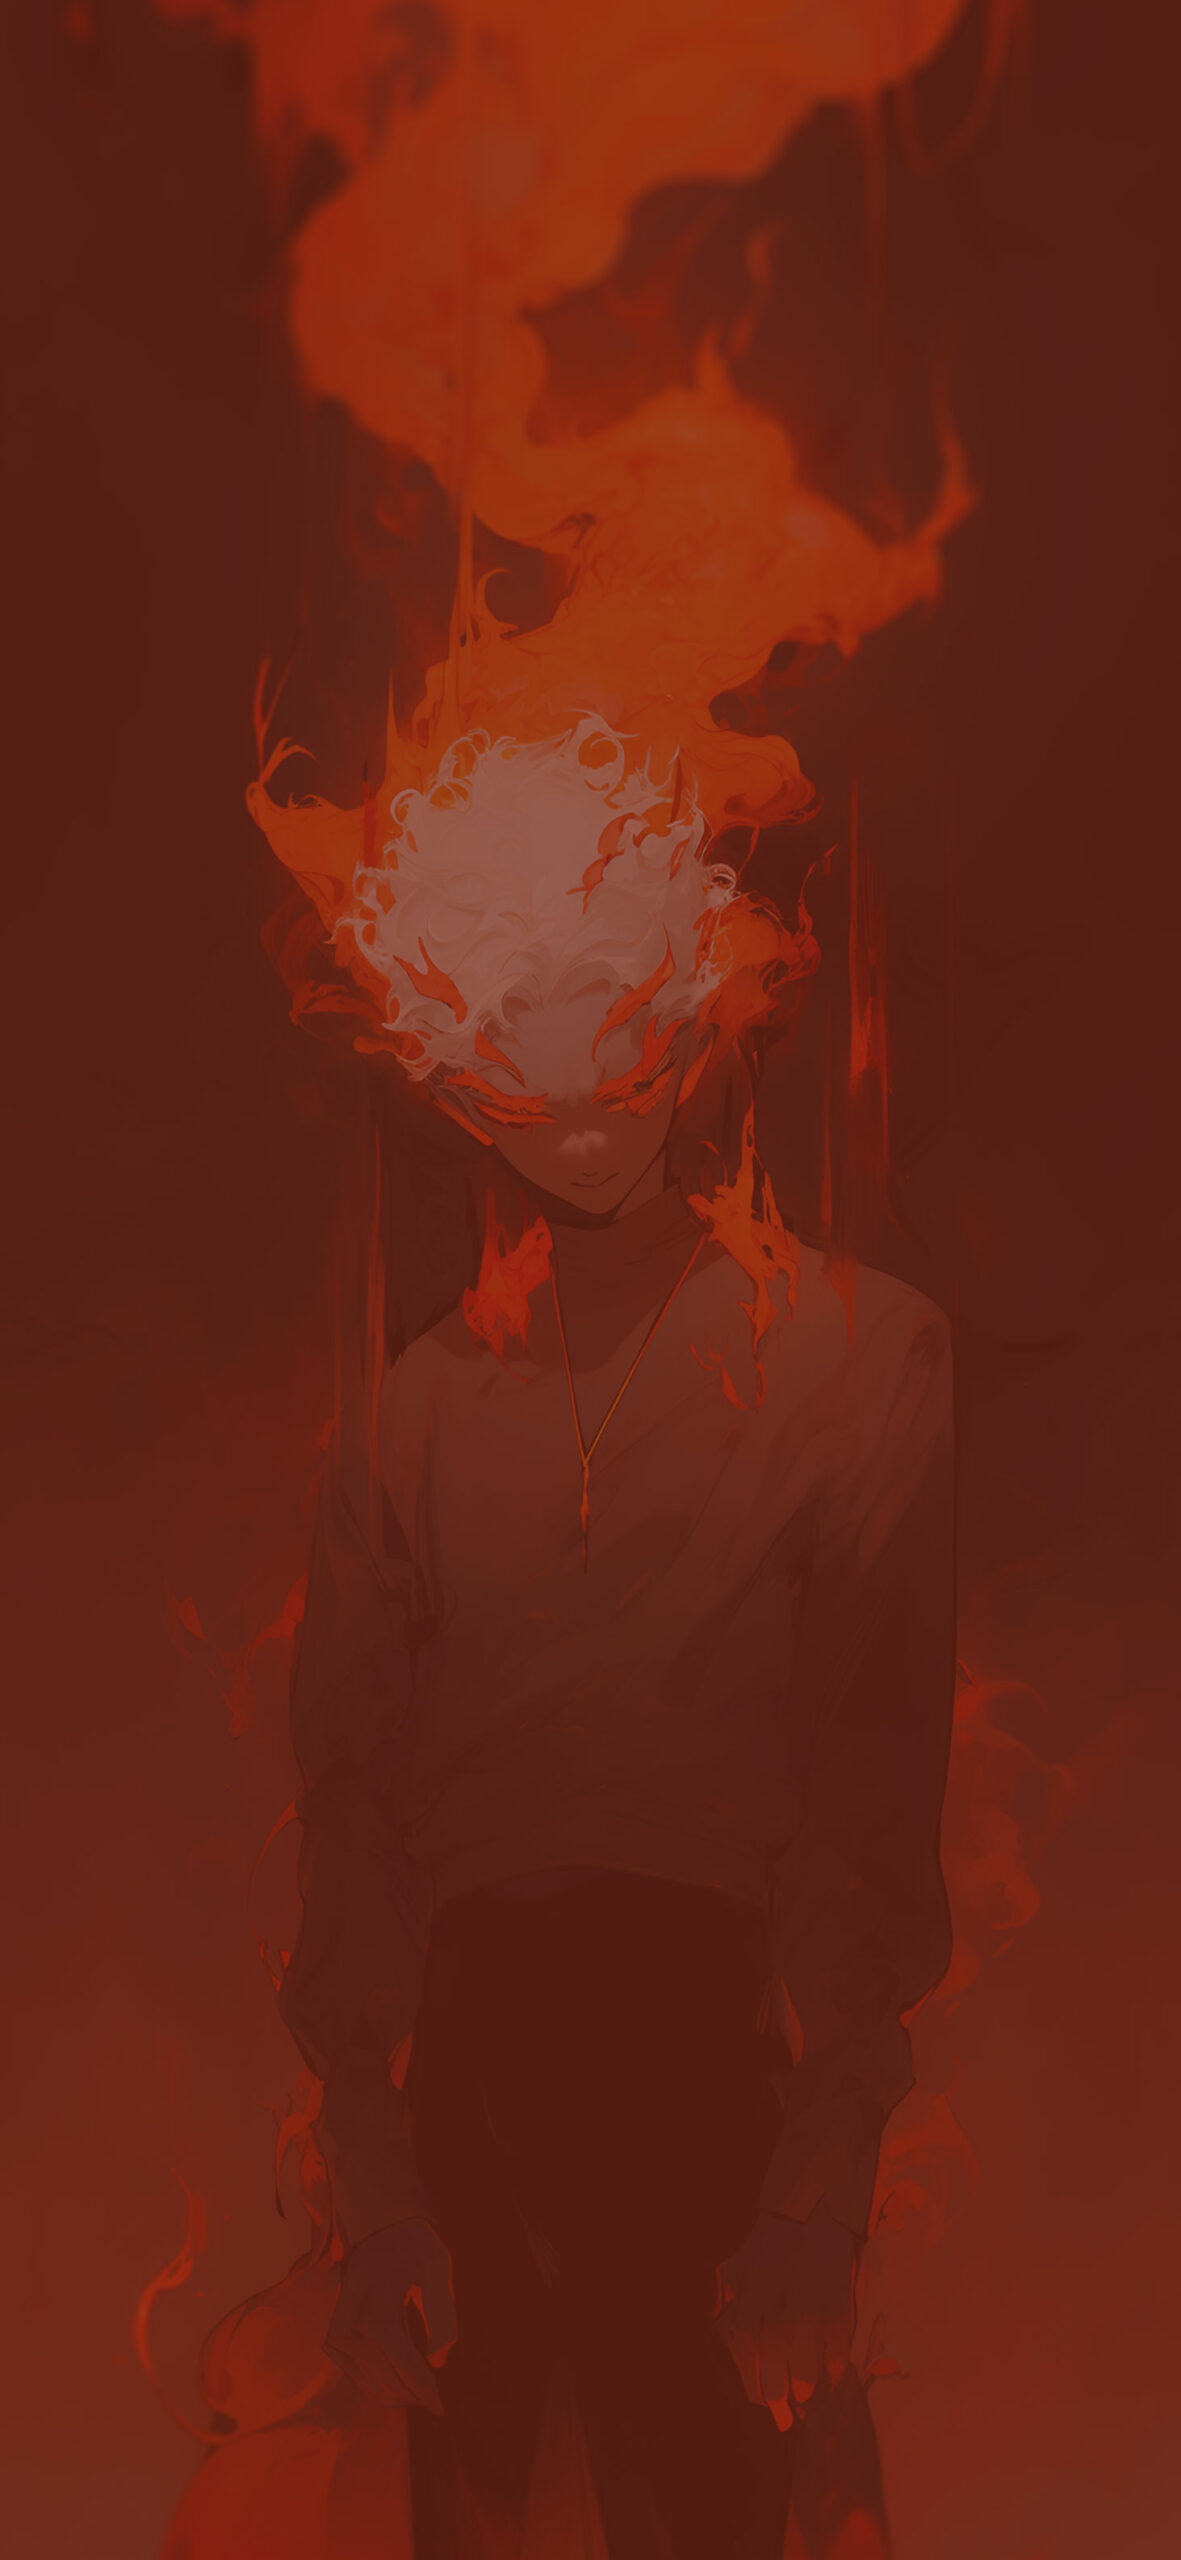 Fiery demon with white hair wallpaper Cool fantasy art wallpap